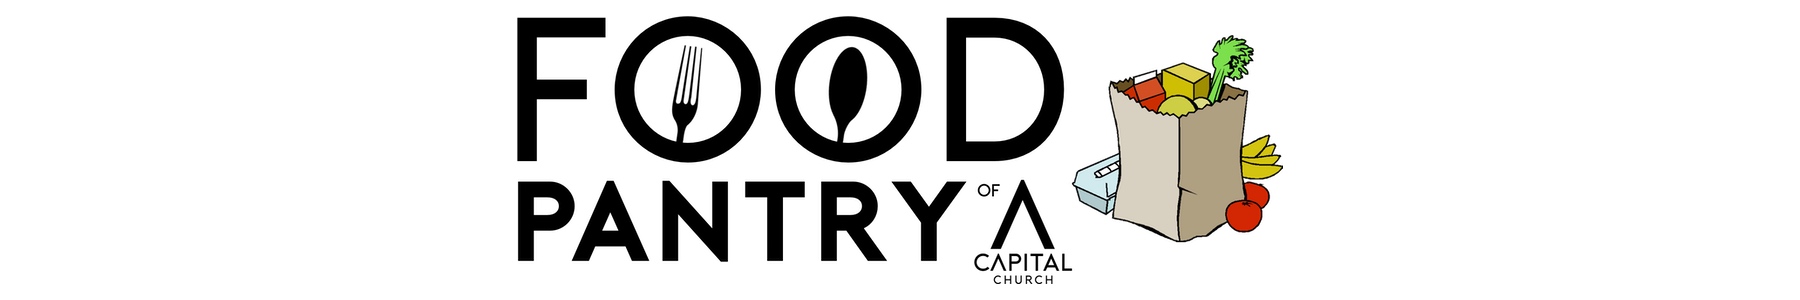 Capital Church - Help Center Food Pantry